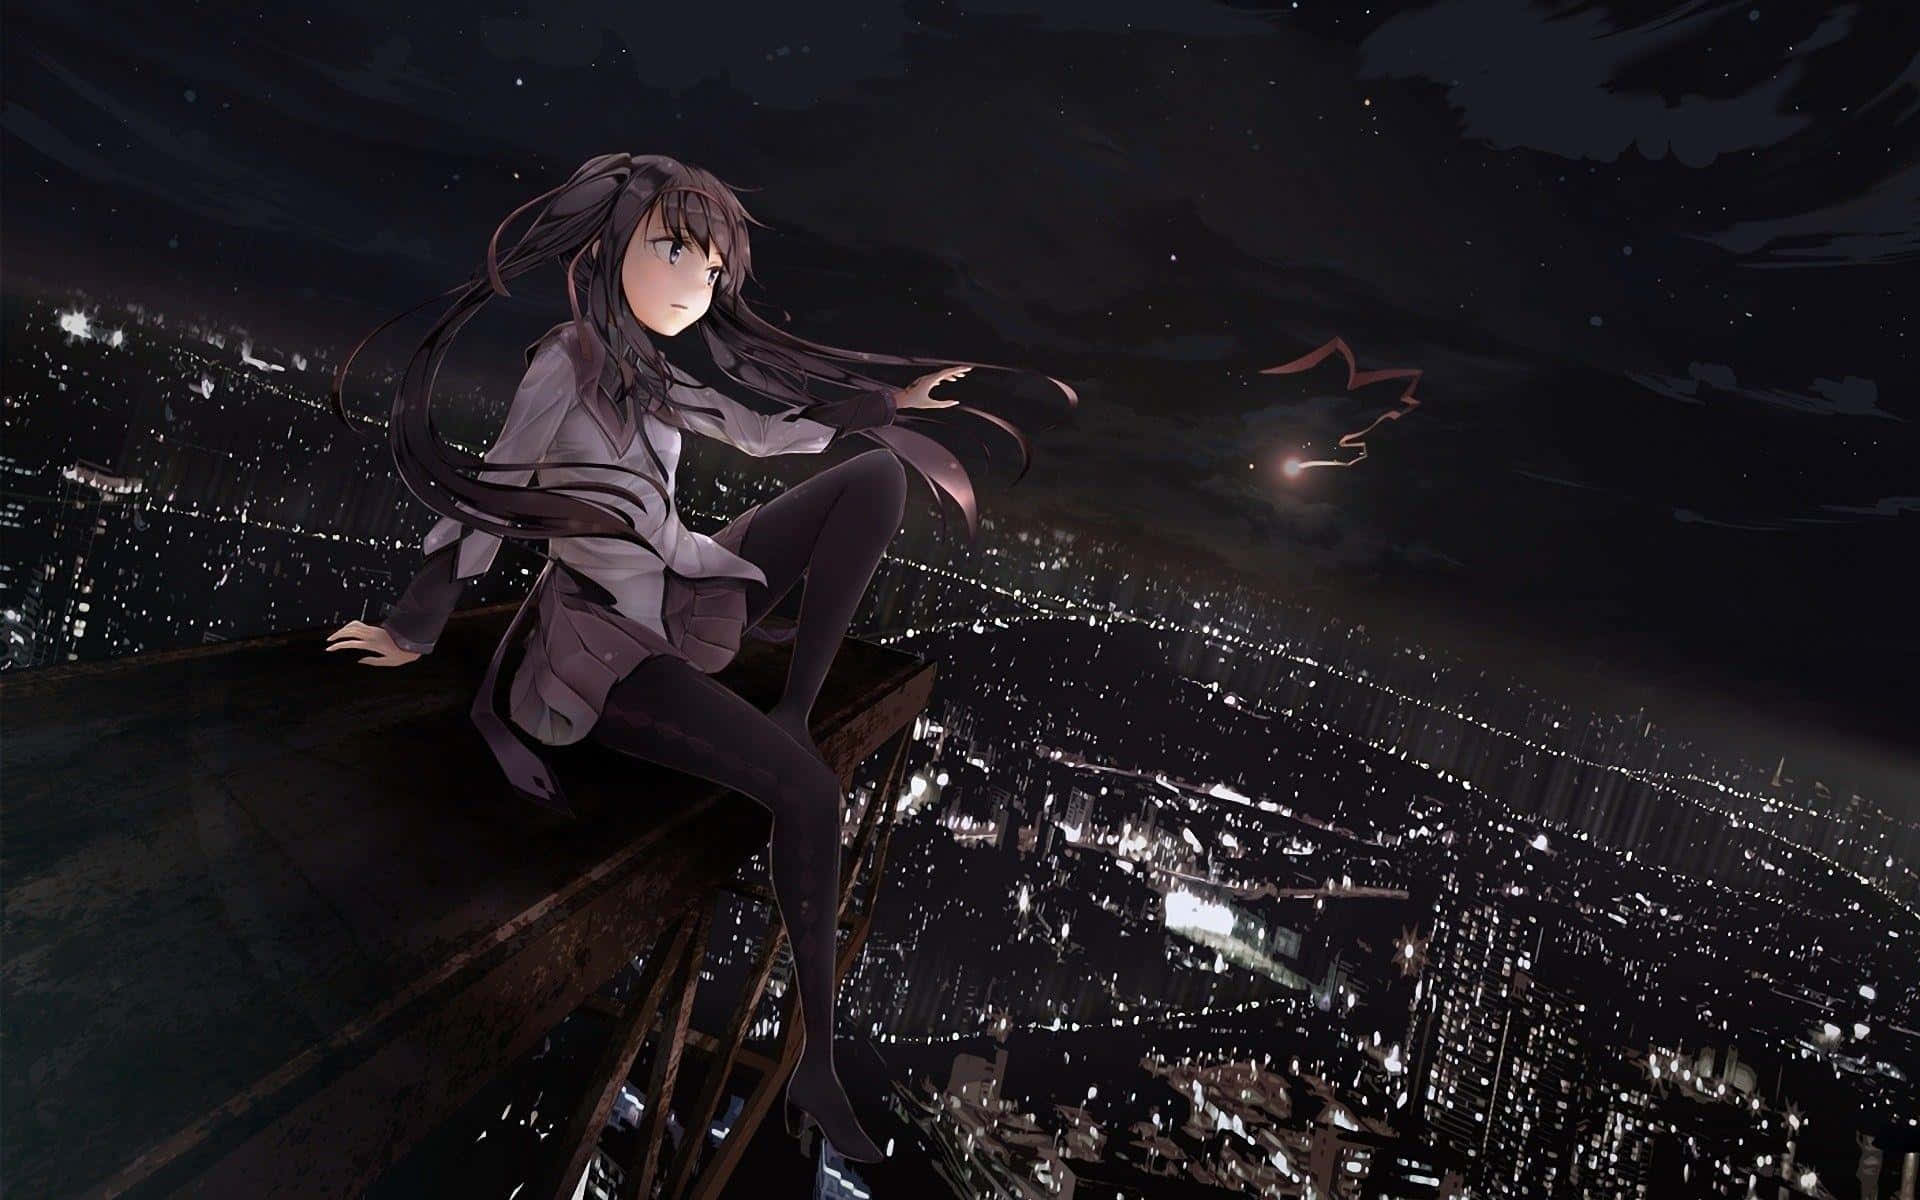 Solitary Anime Girl Overlooking Cityscape Wallpaper